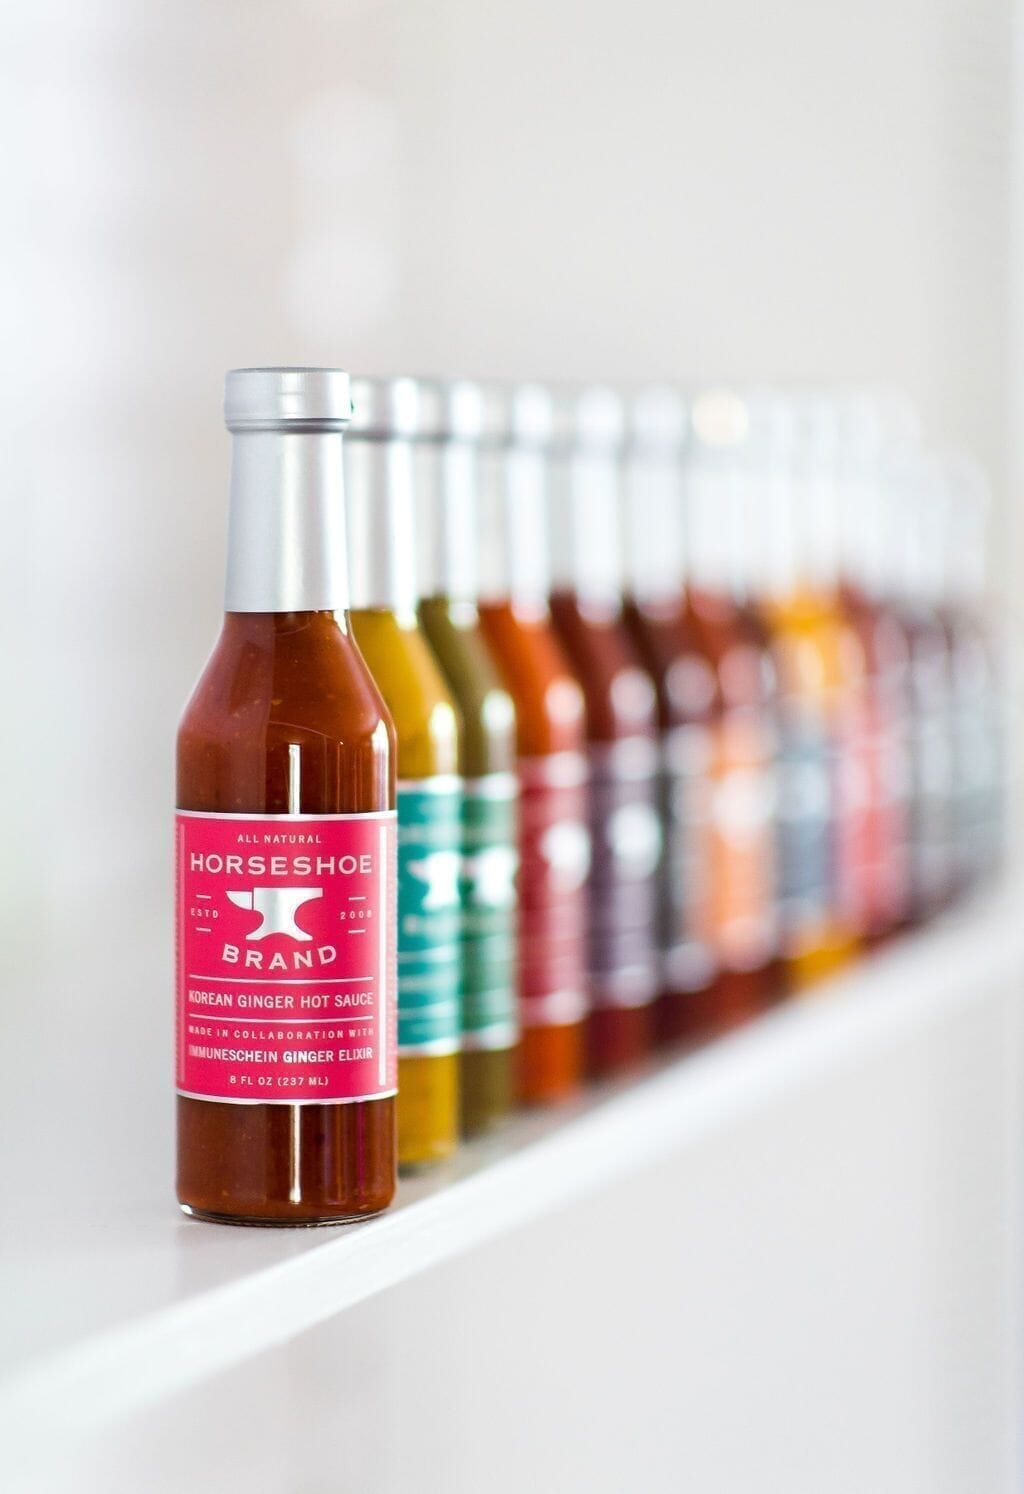 
                  
                    Korean Ginger Hot Sauce - Collaboration with Horseshoe Brand Hot Sauce ImmuneSchein Ginger Elixirs 
                  
                